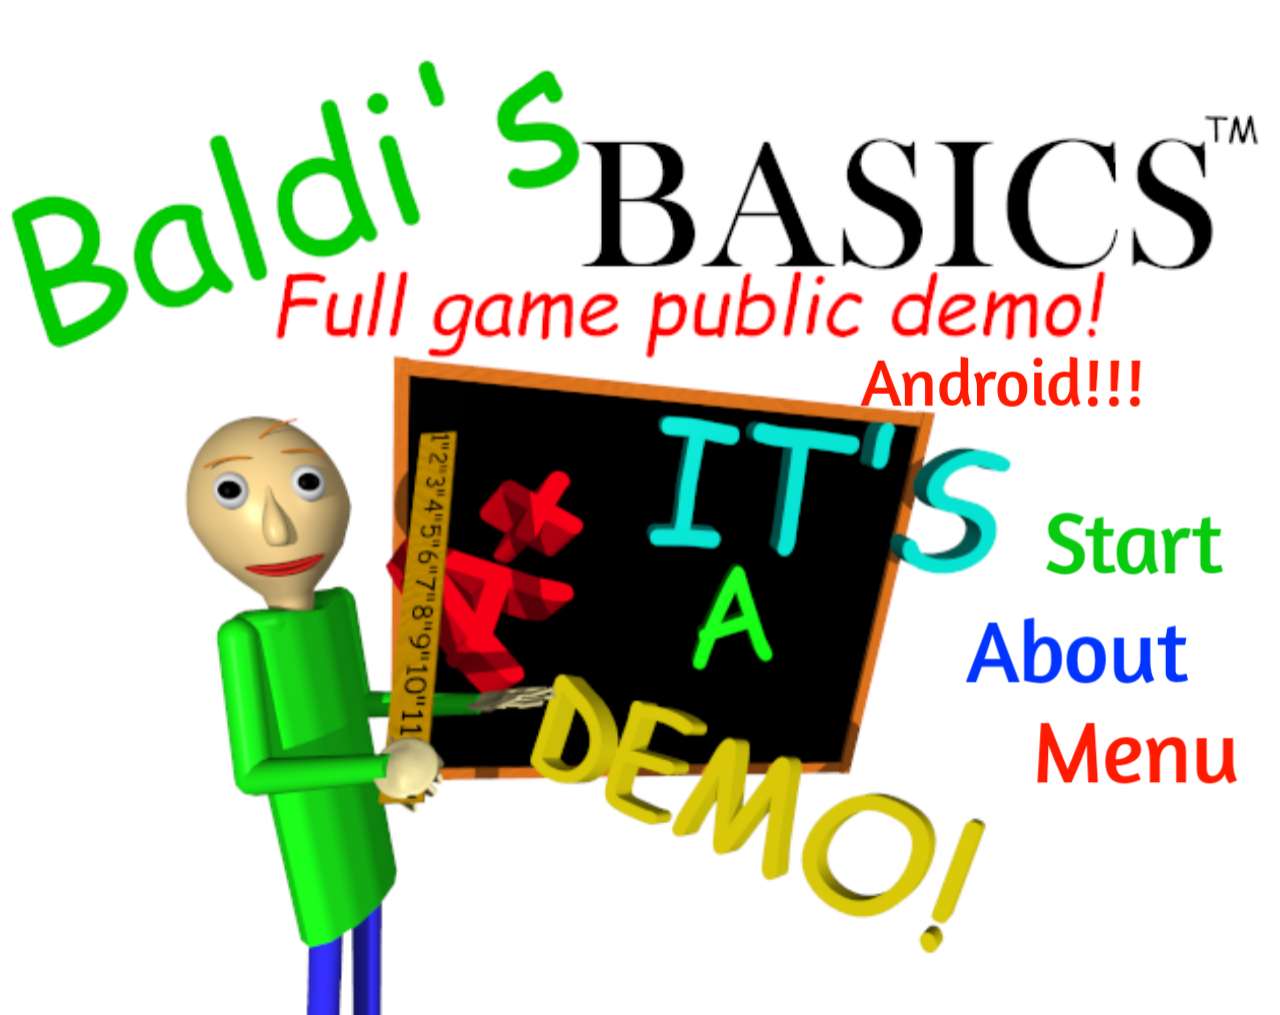 Baldis basics demo game. БАЛДИ игра. Игра Baldi's Basics. Обложка Baldi s Basics. БАЛДИ логотип игры.